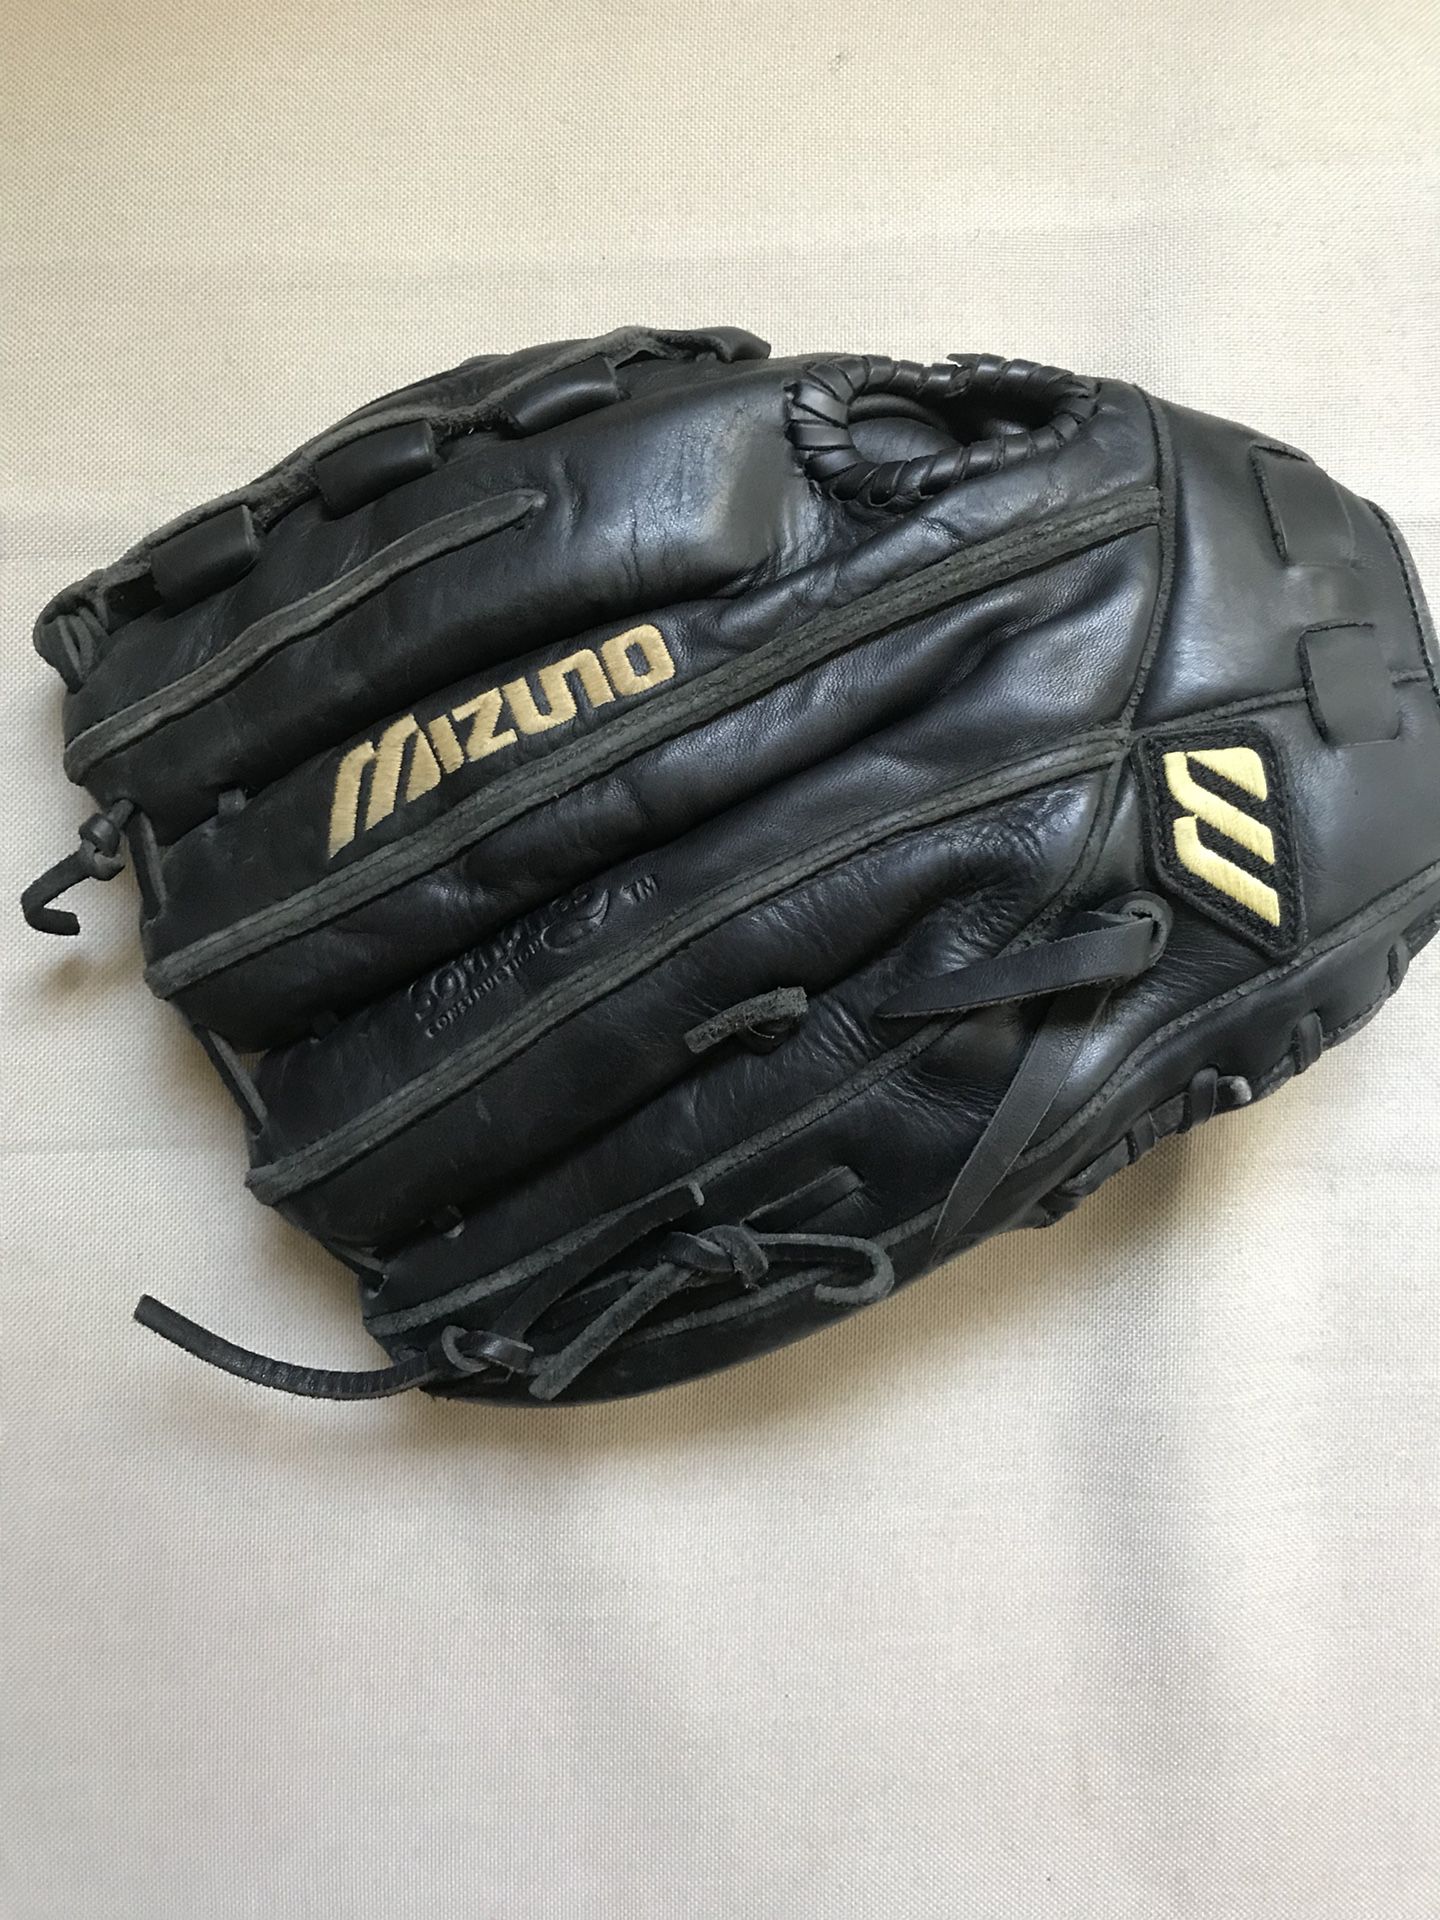 MiZUNO GCS 1200 BK PRO MODEL Adult Softball Glove